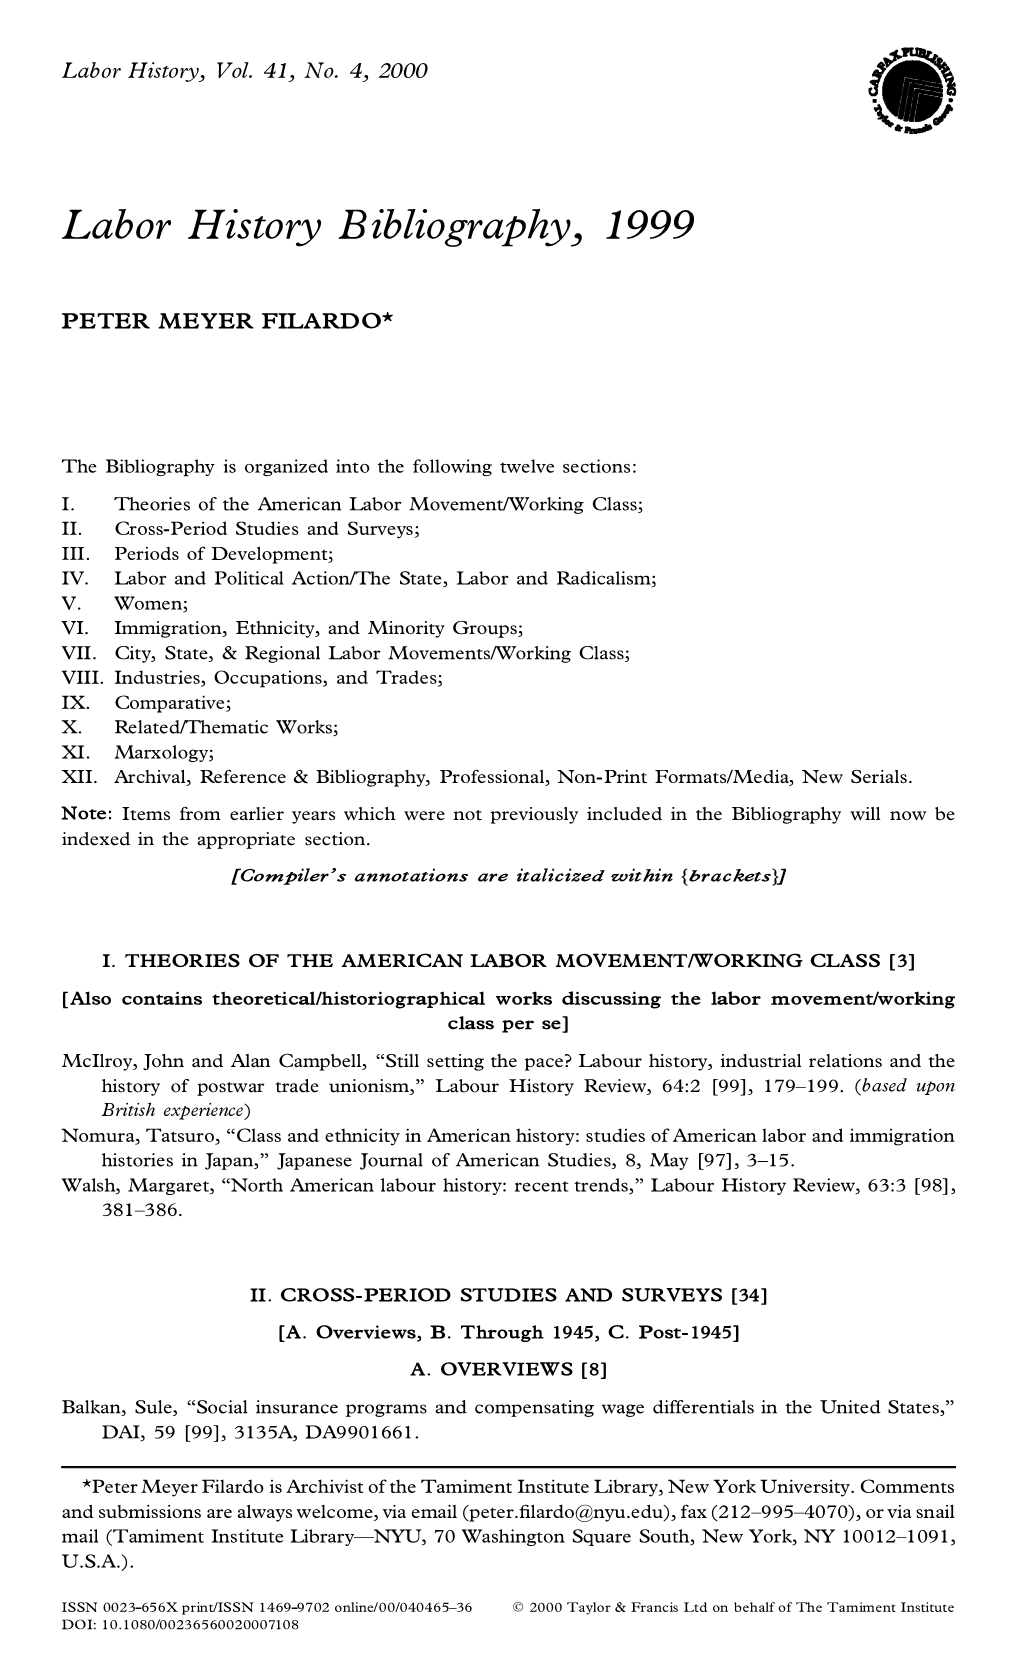 Labor History Bibliography, 1999